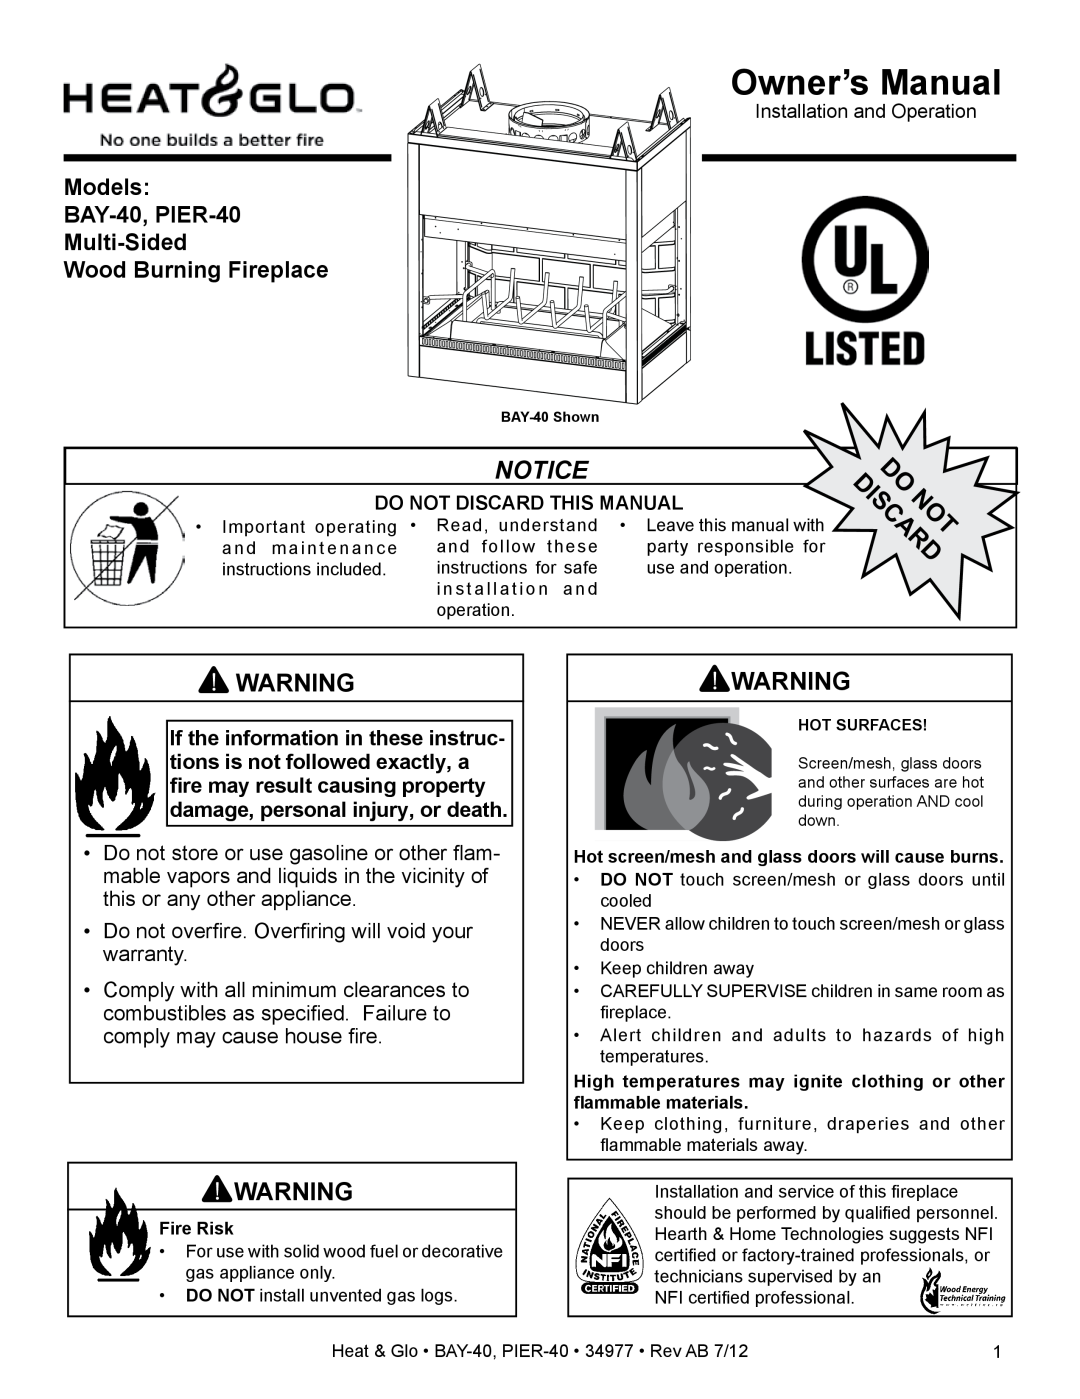 Heat & Glo LifeStyle owner manual Models BAY-40, PIER-40 Multi-Sided, Wood Burning Fireplace 